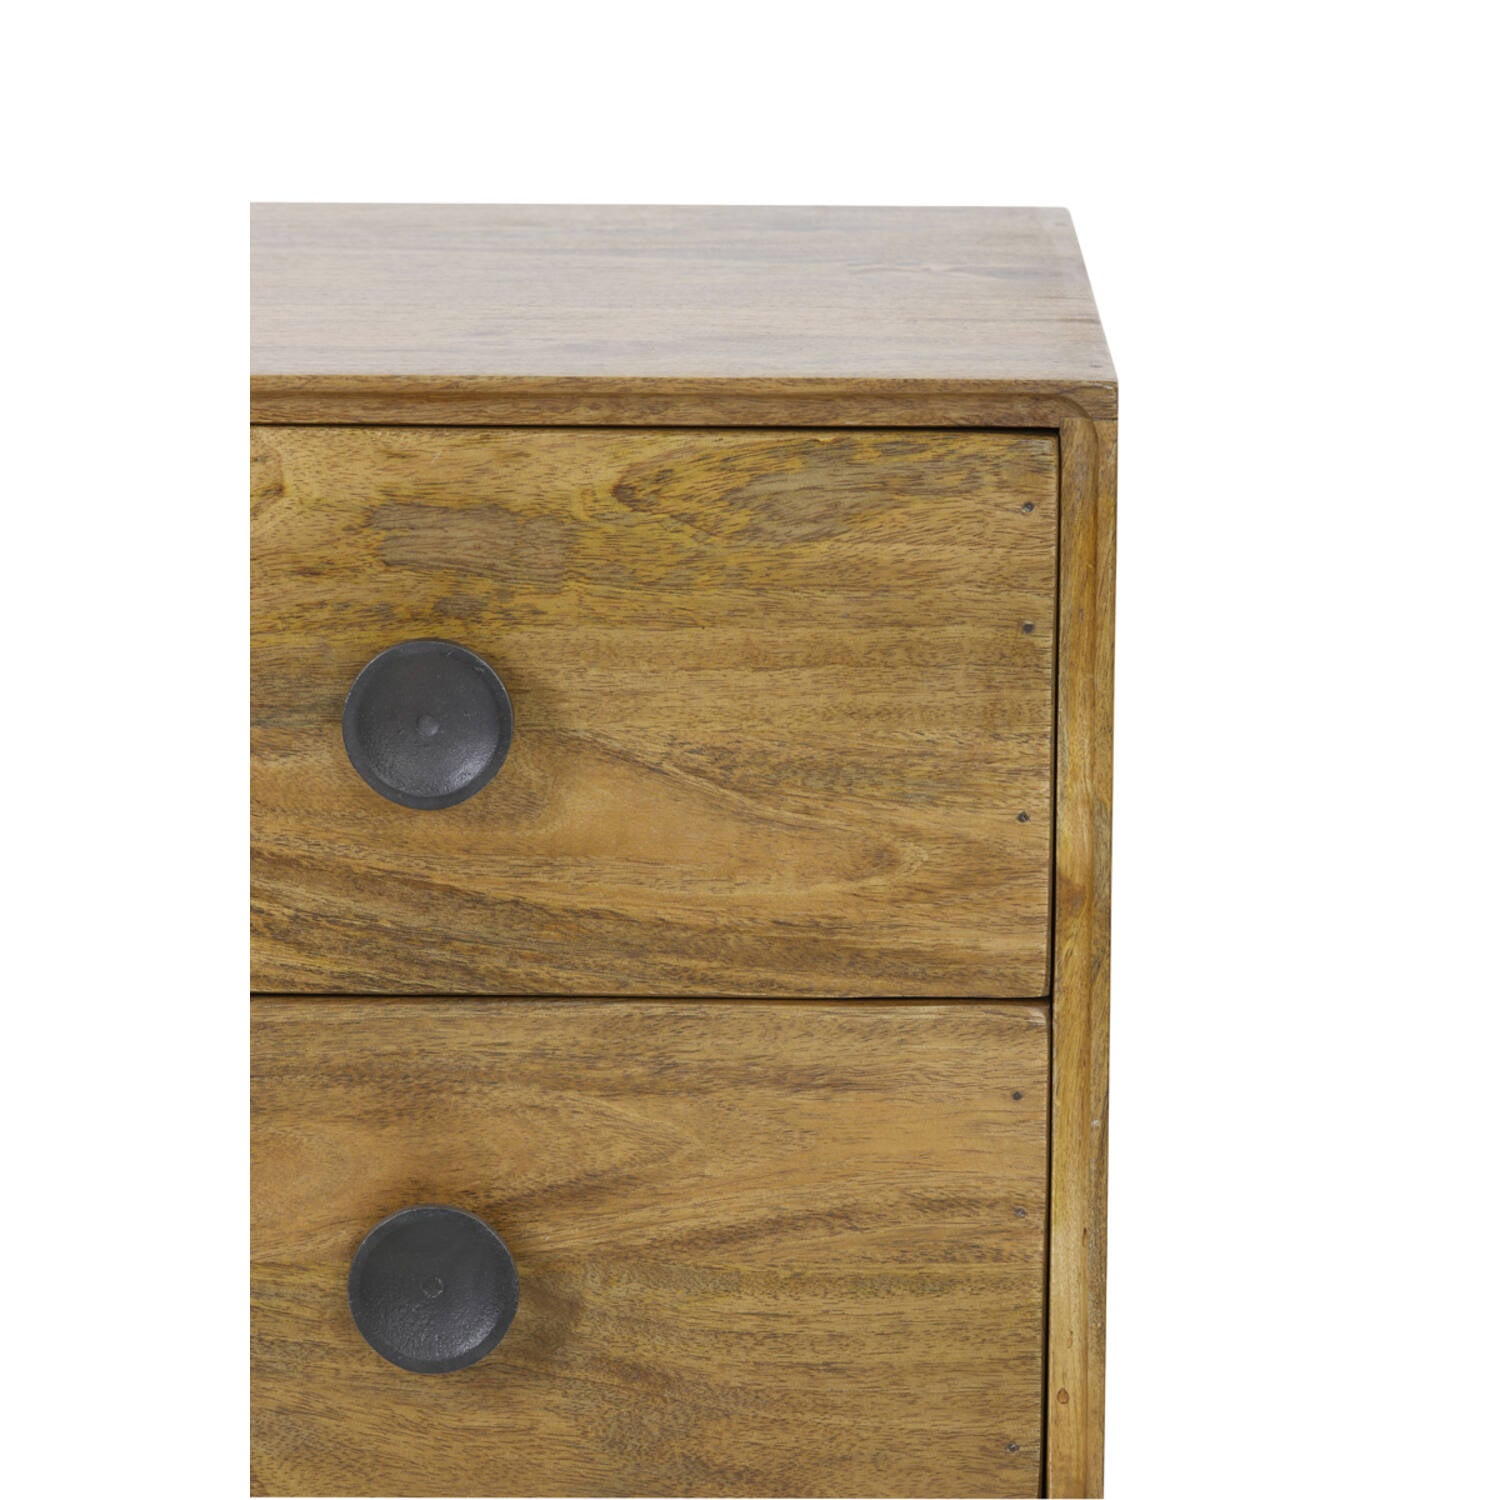 Espita Small Cabinet - Oil Brown Wood Finish